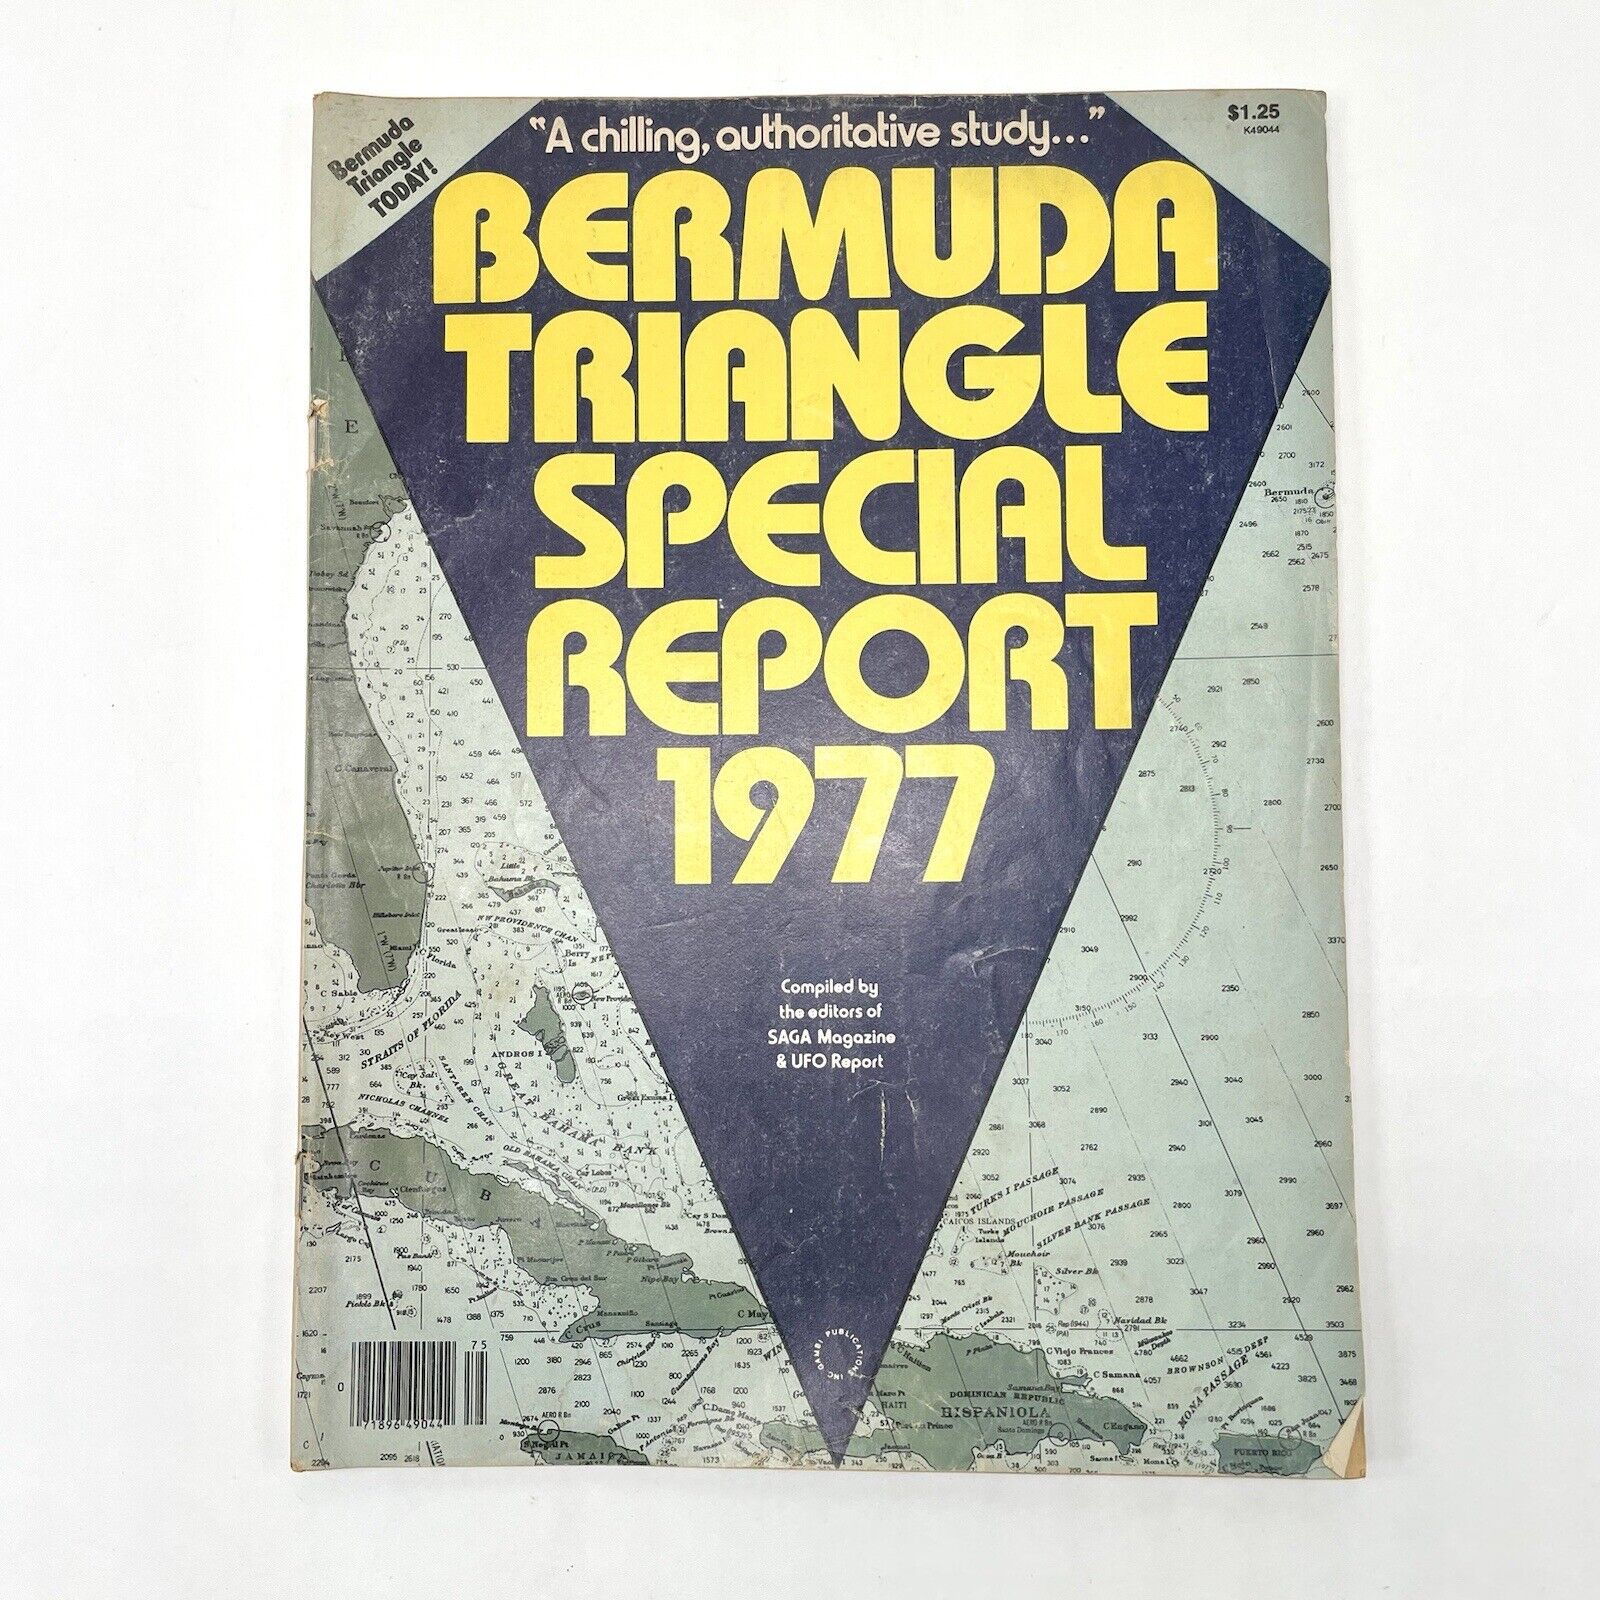 SAGA MAGAZINE & UFO REPORT BERMUDA TRIANGLE SPECIAL REPORT 1977 Vintage Mystery